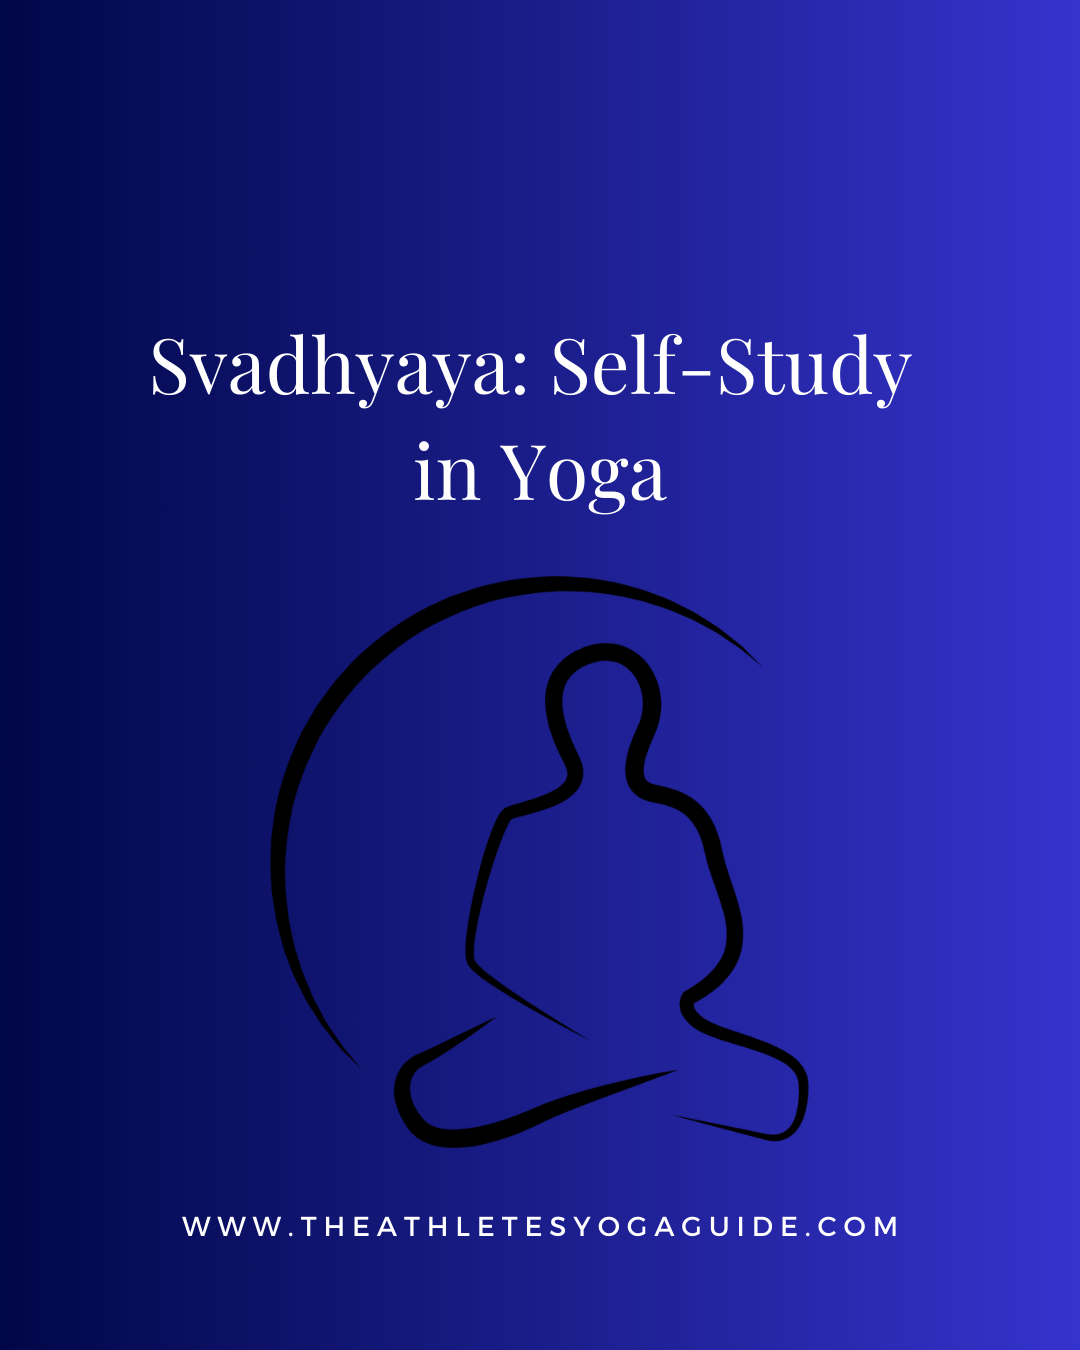 Svadhyaya: Self-Study in Yoga